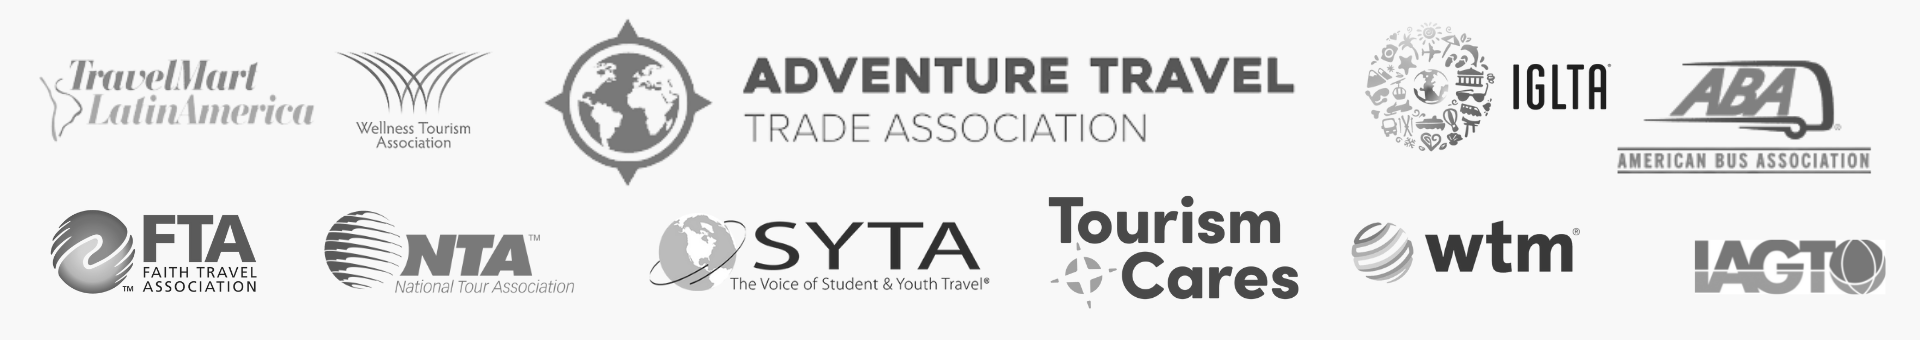 Travel Associations & Conferences - Logos 